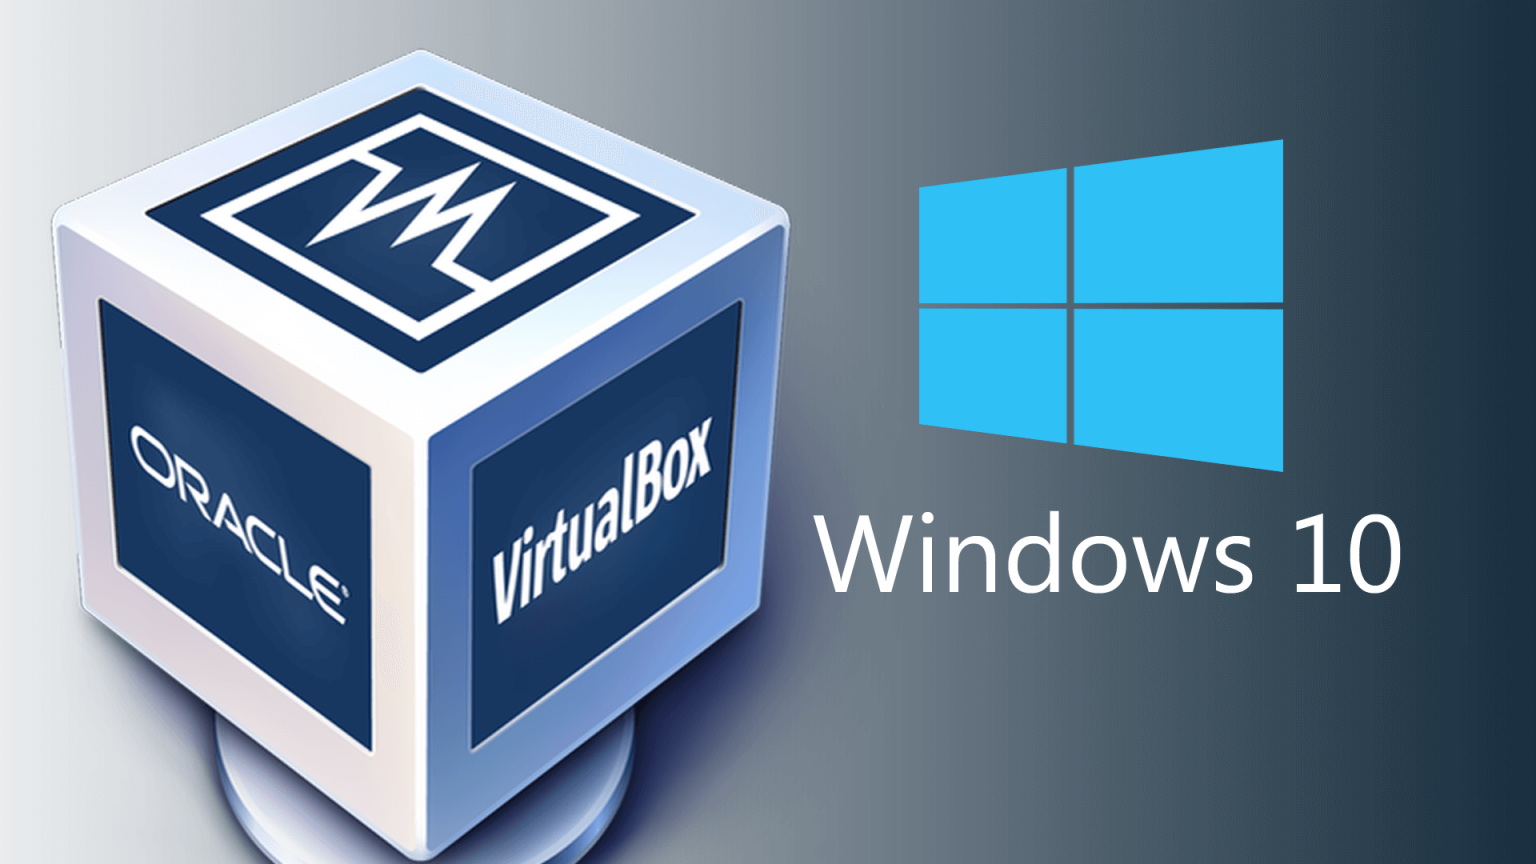 virtualbox windows 10 download 64 bit